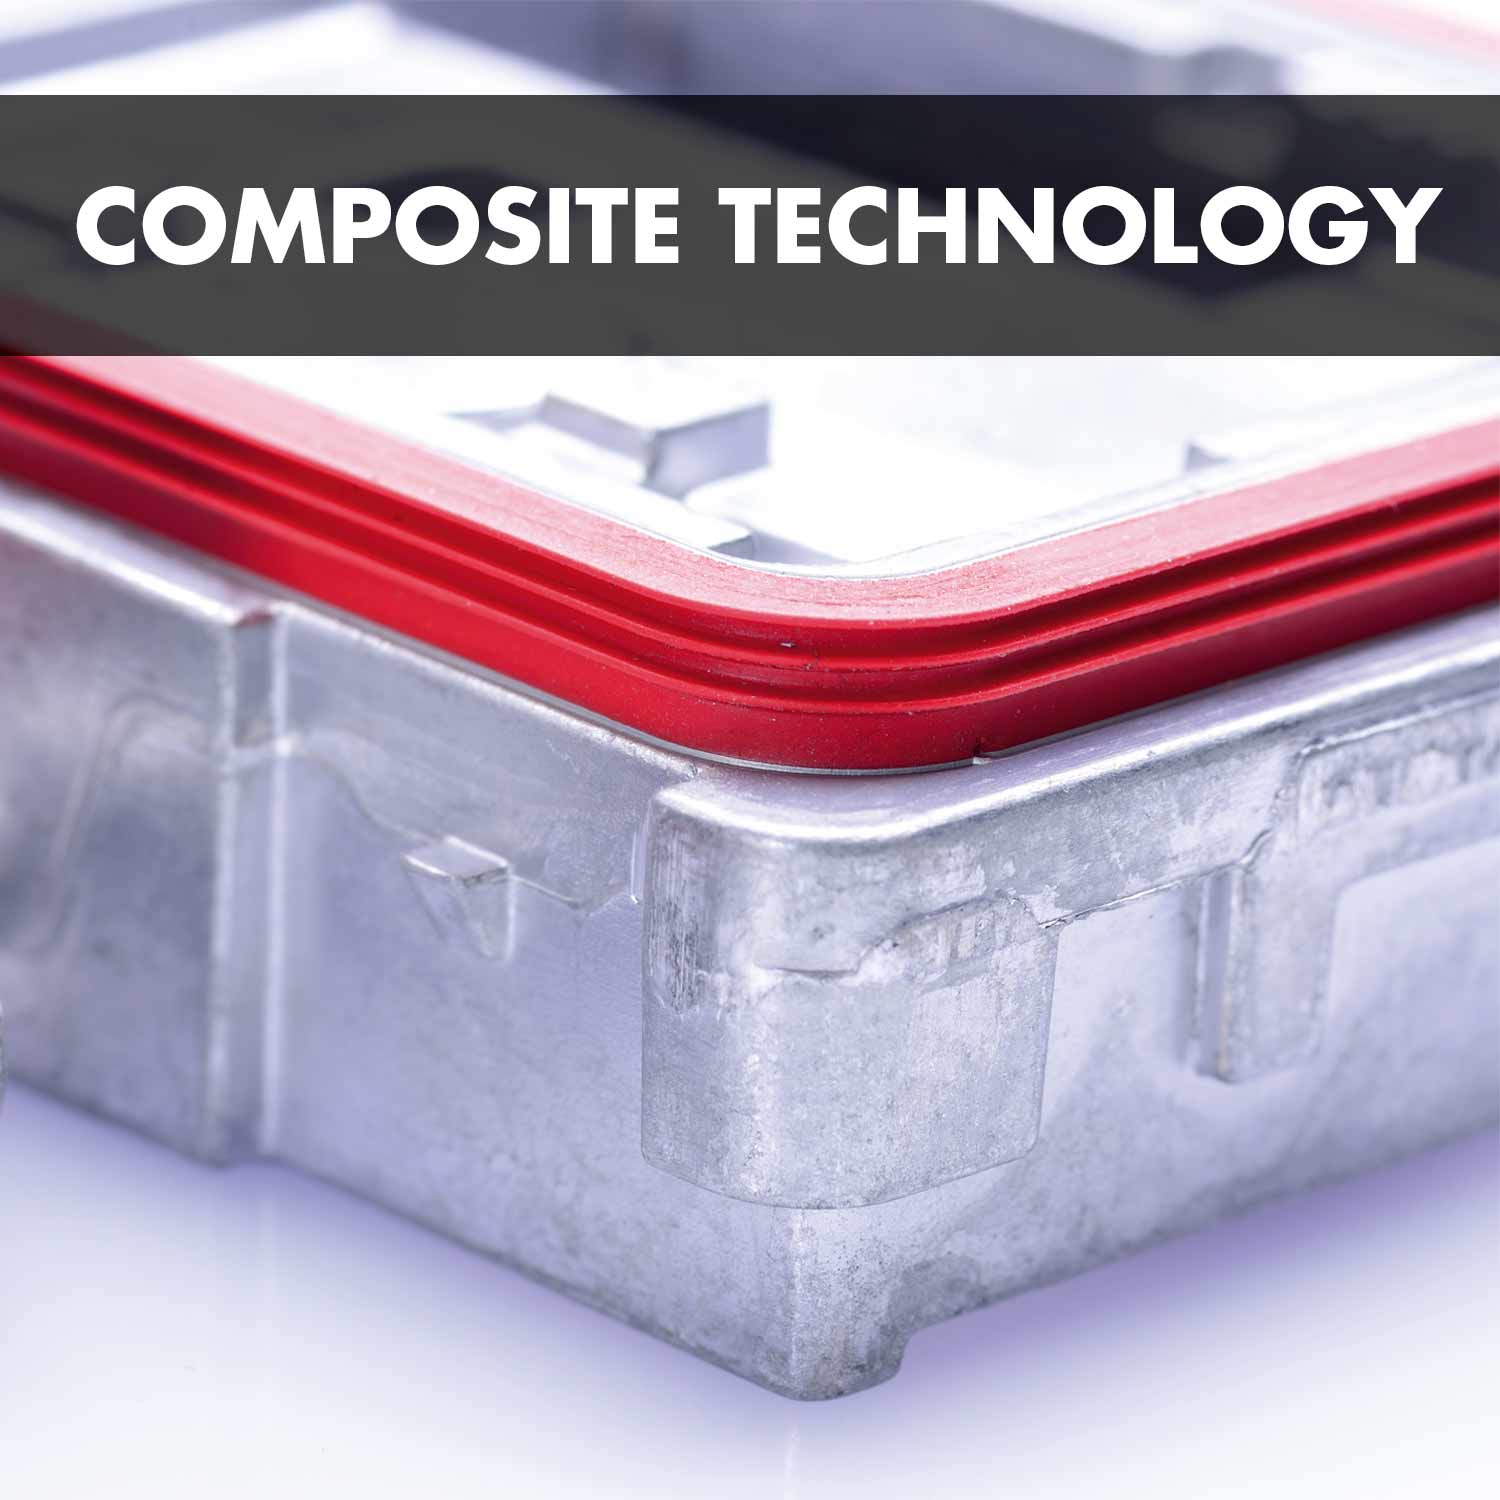 Composite technology